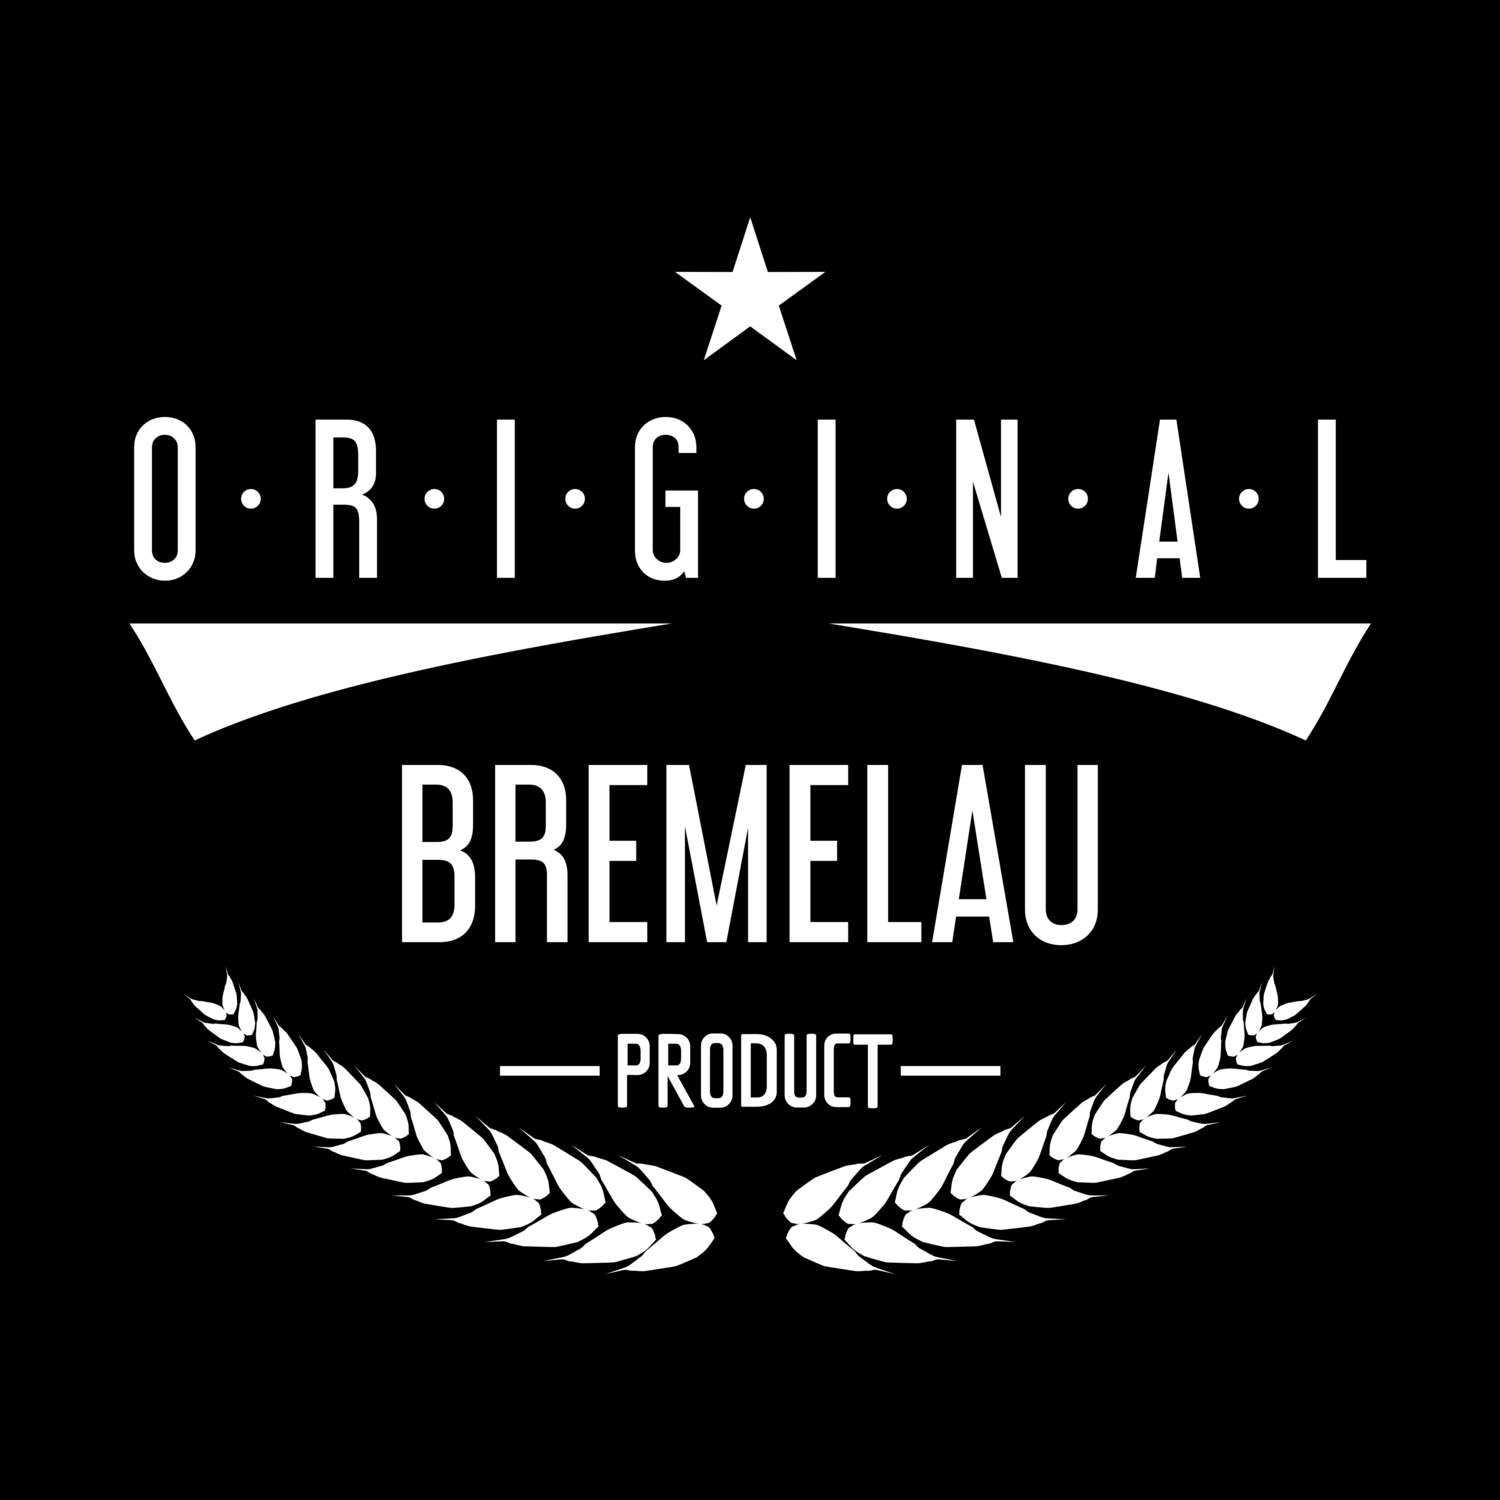 Bremelau T-Shirt »Original Product«